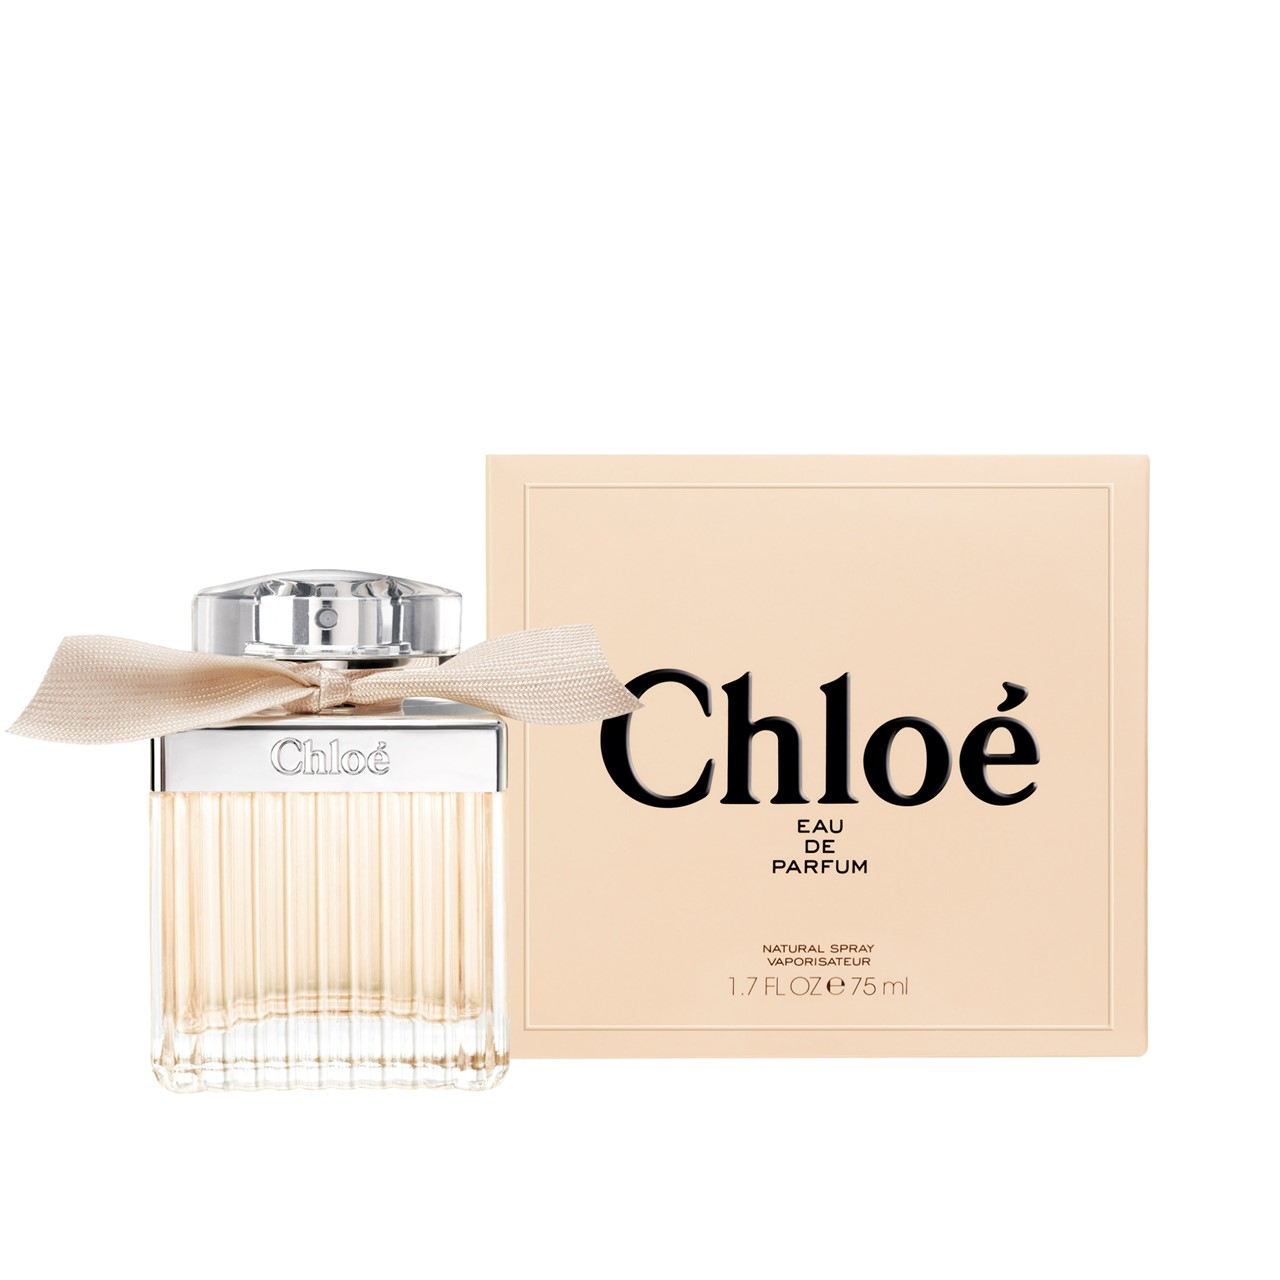 Buy Chloé Eau de Parfum Women USA For ·